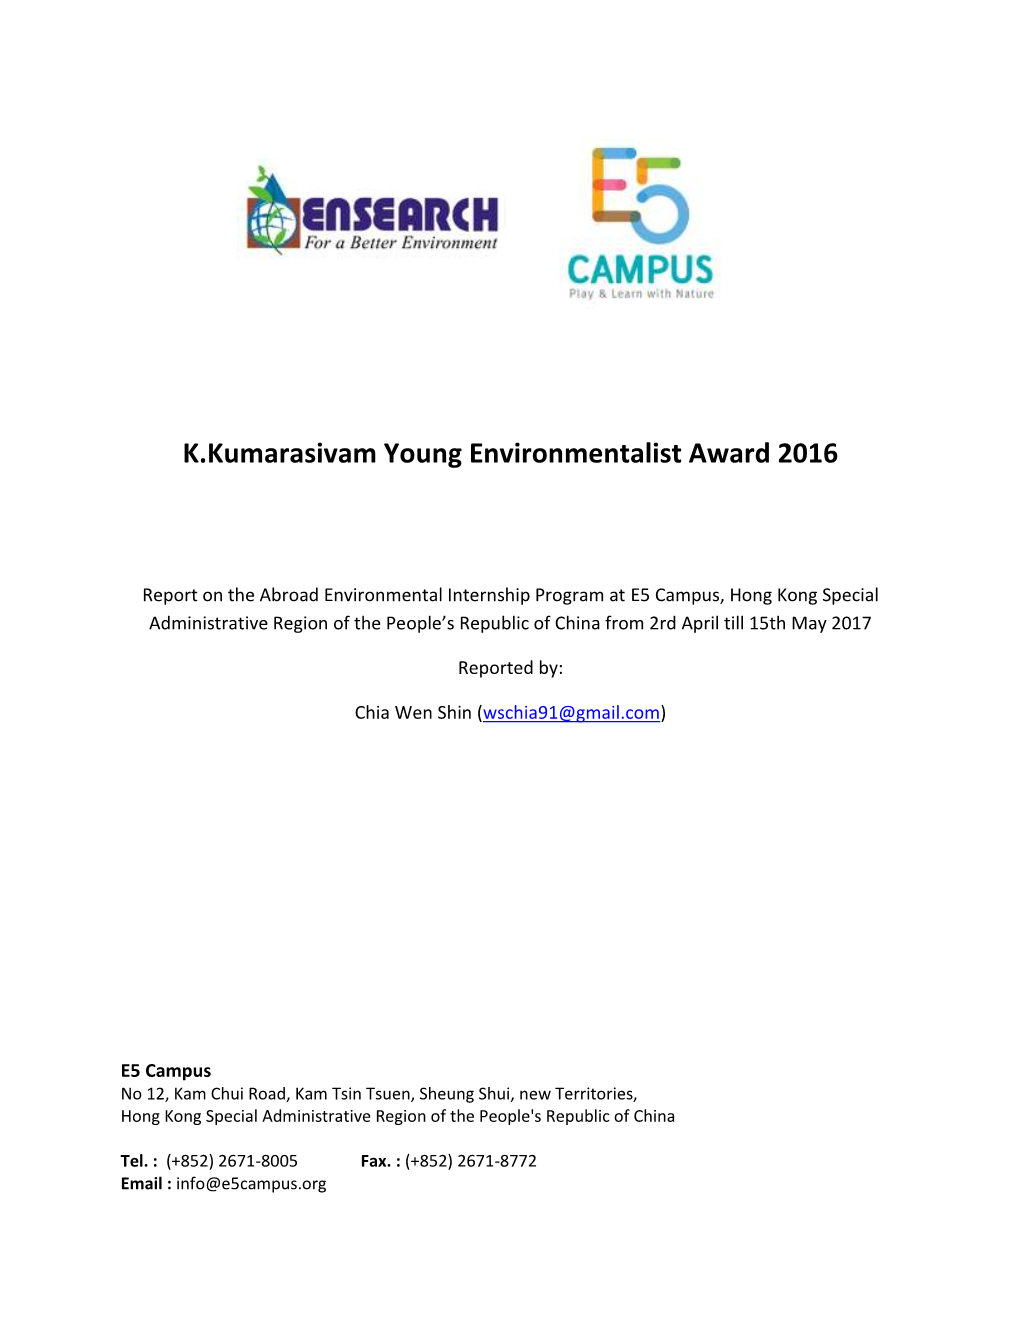 Report on the Abroad Environmental Internship Program At